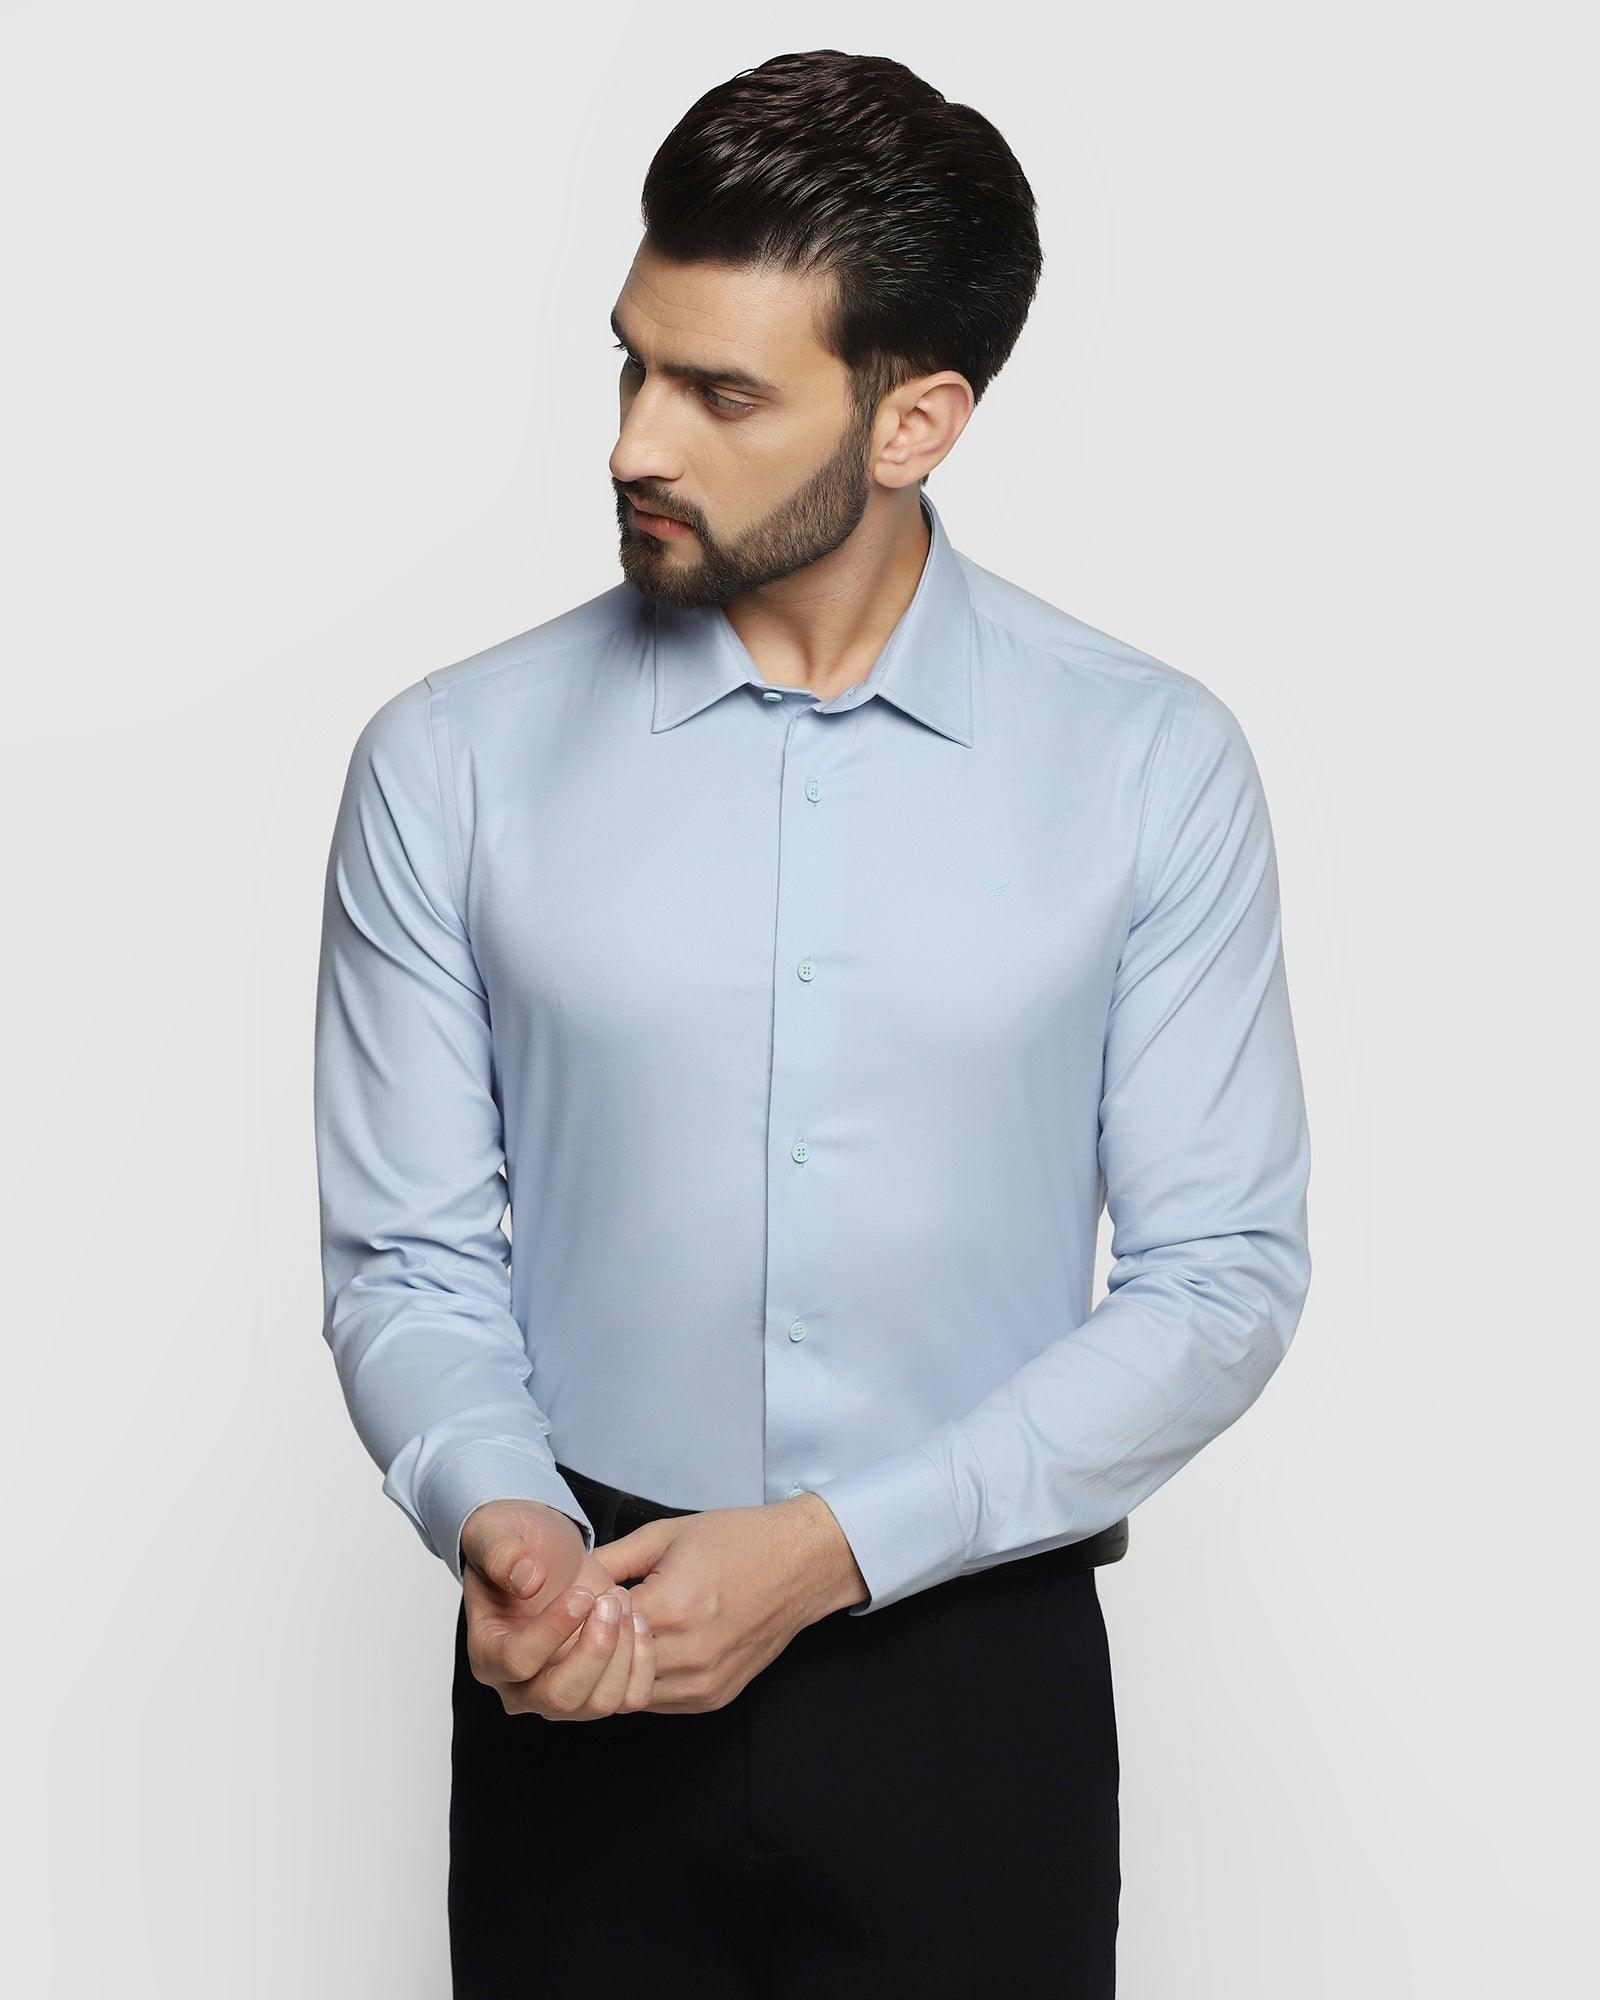 TechPro Formal Blue Solid Shirt - Tartan